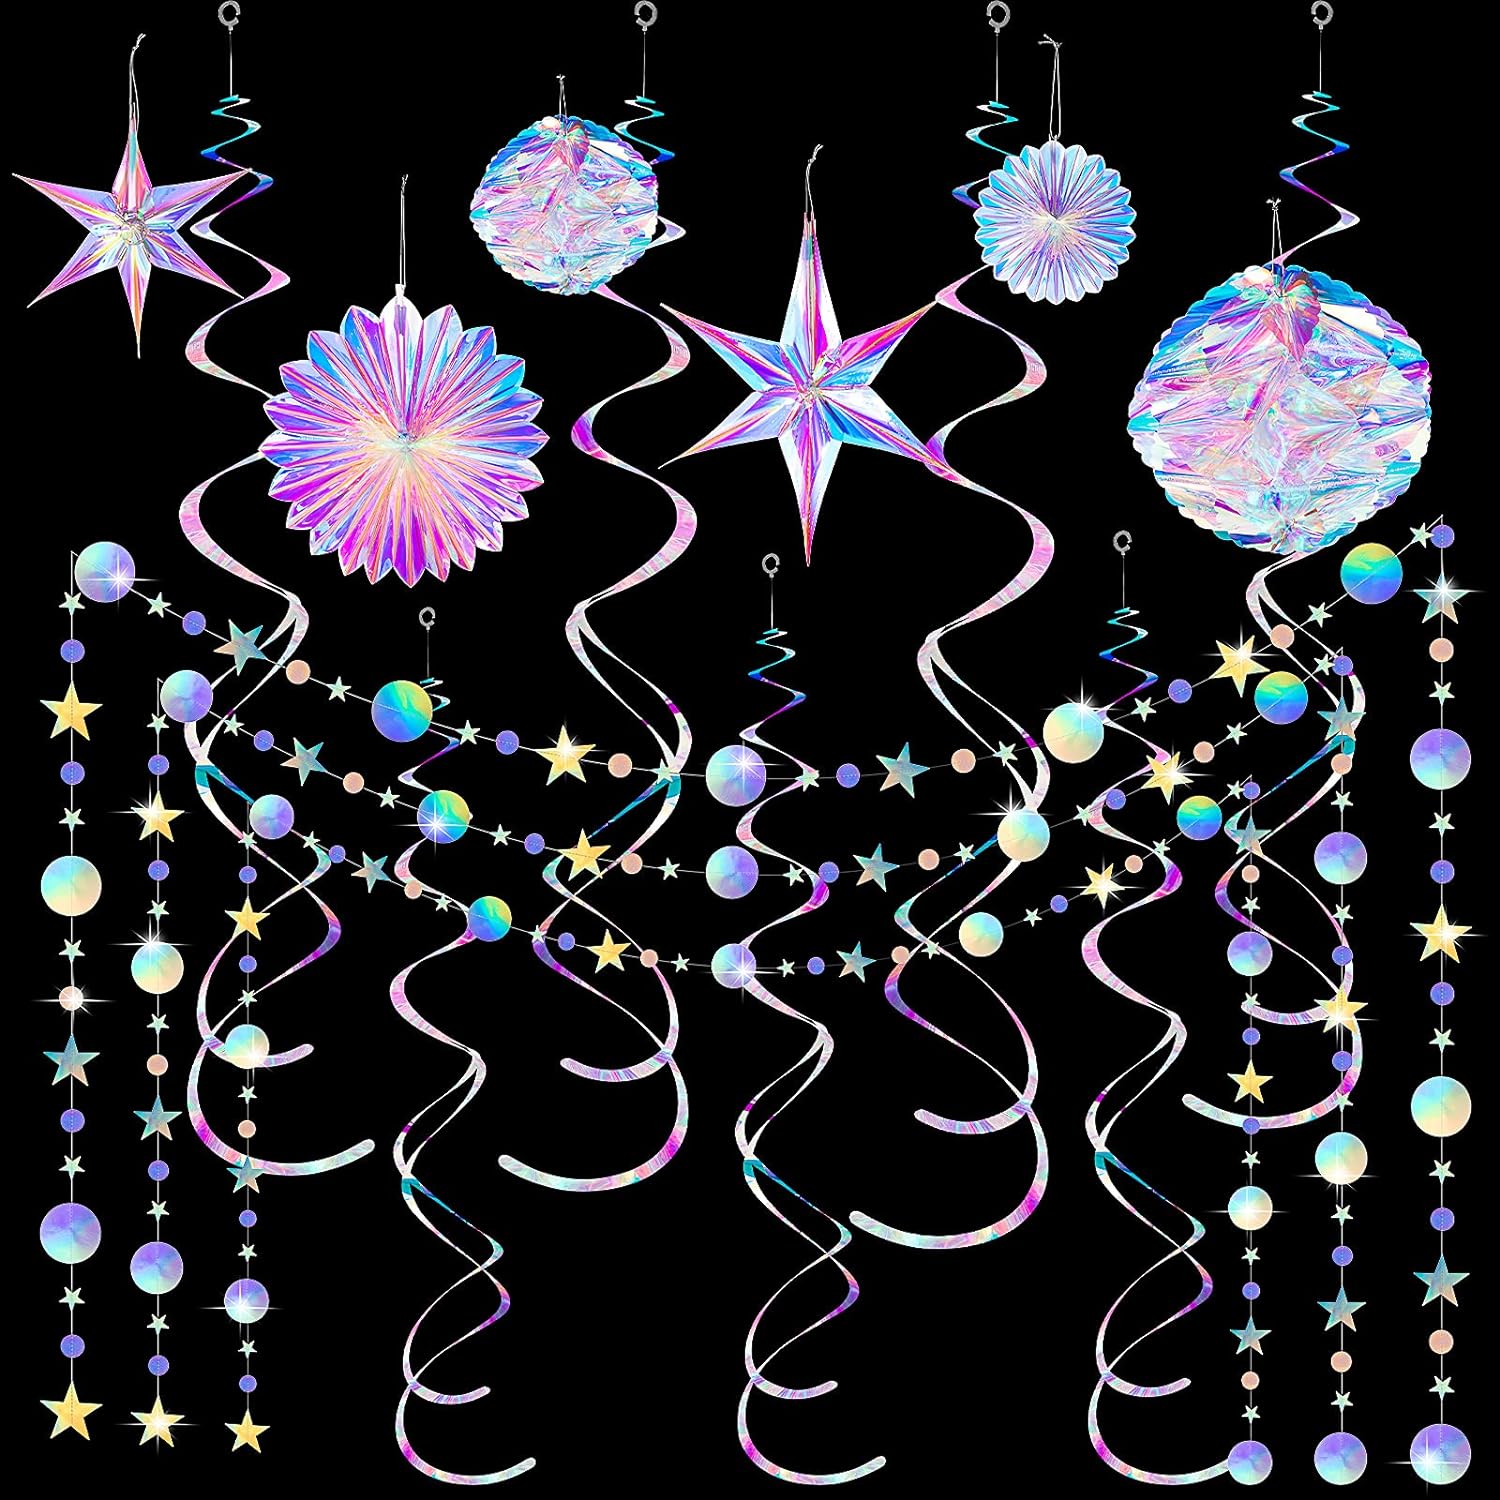 Bulk Rainbow Party Decor Set Hanging Balls Paper Fans Snowflake Garlands White Star Swirls Ideal for Birthdays Weddings Wholesale